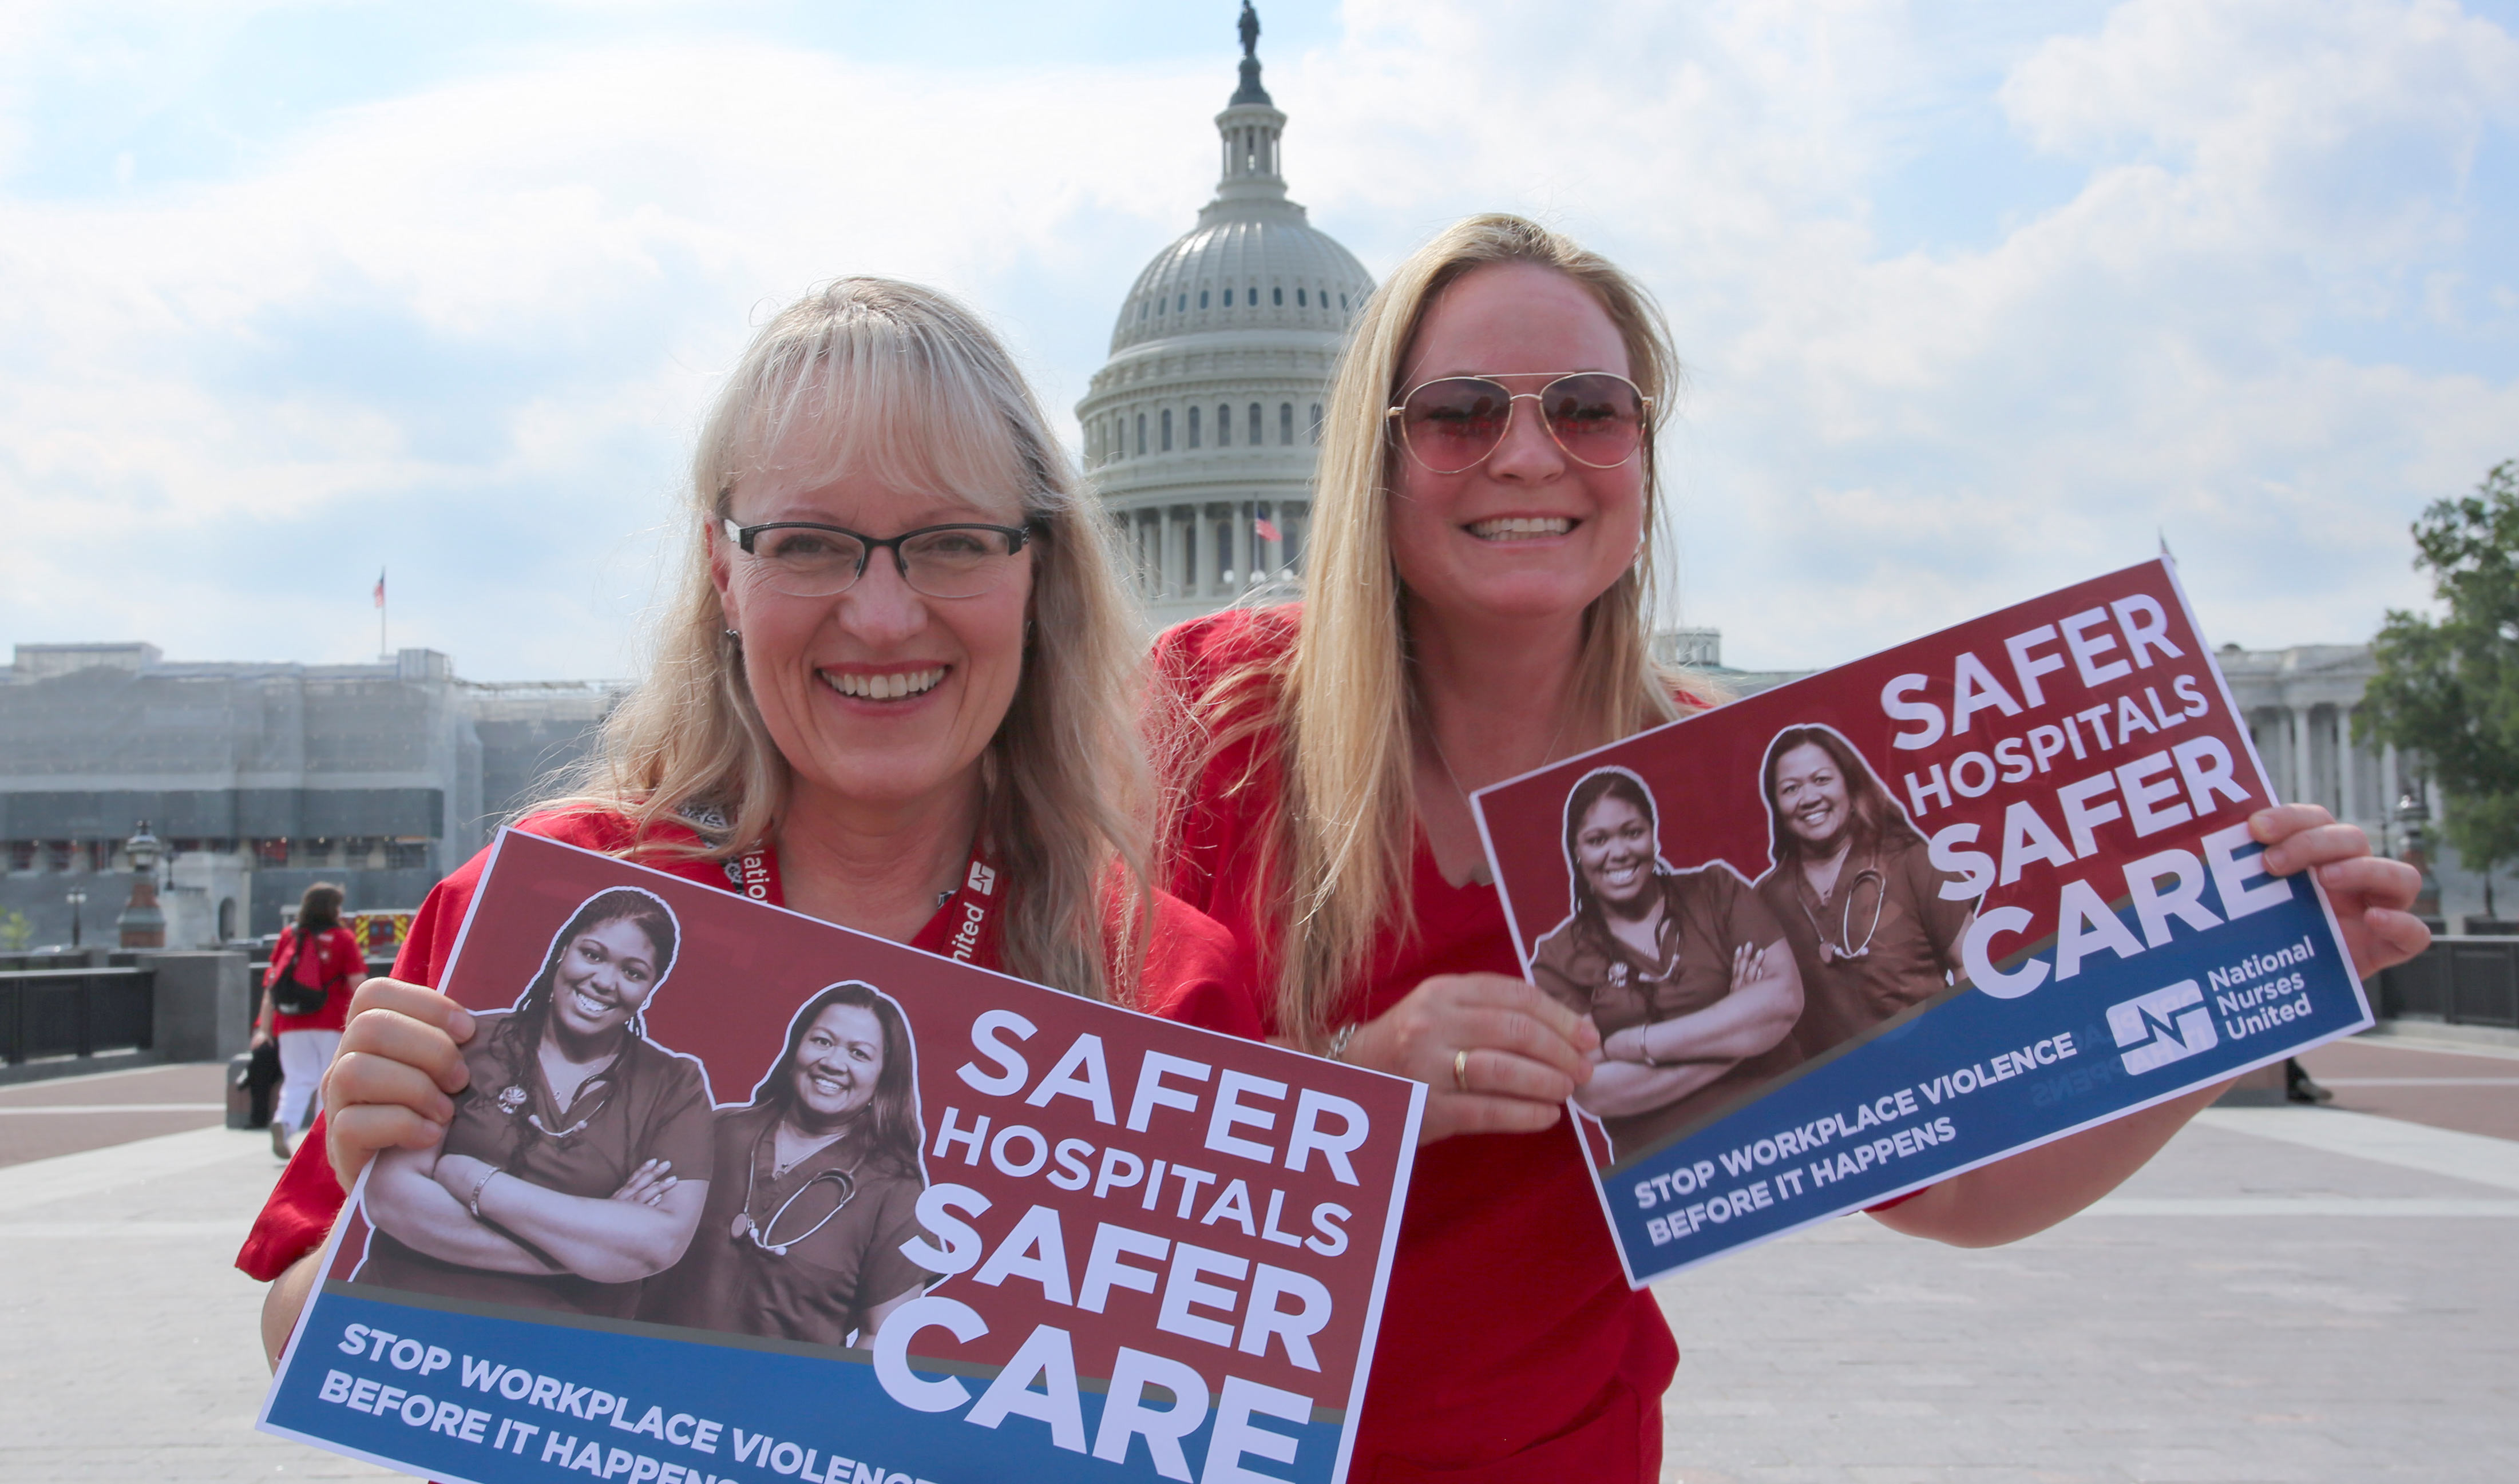 Nurses at the Capitol